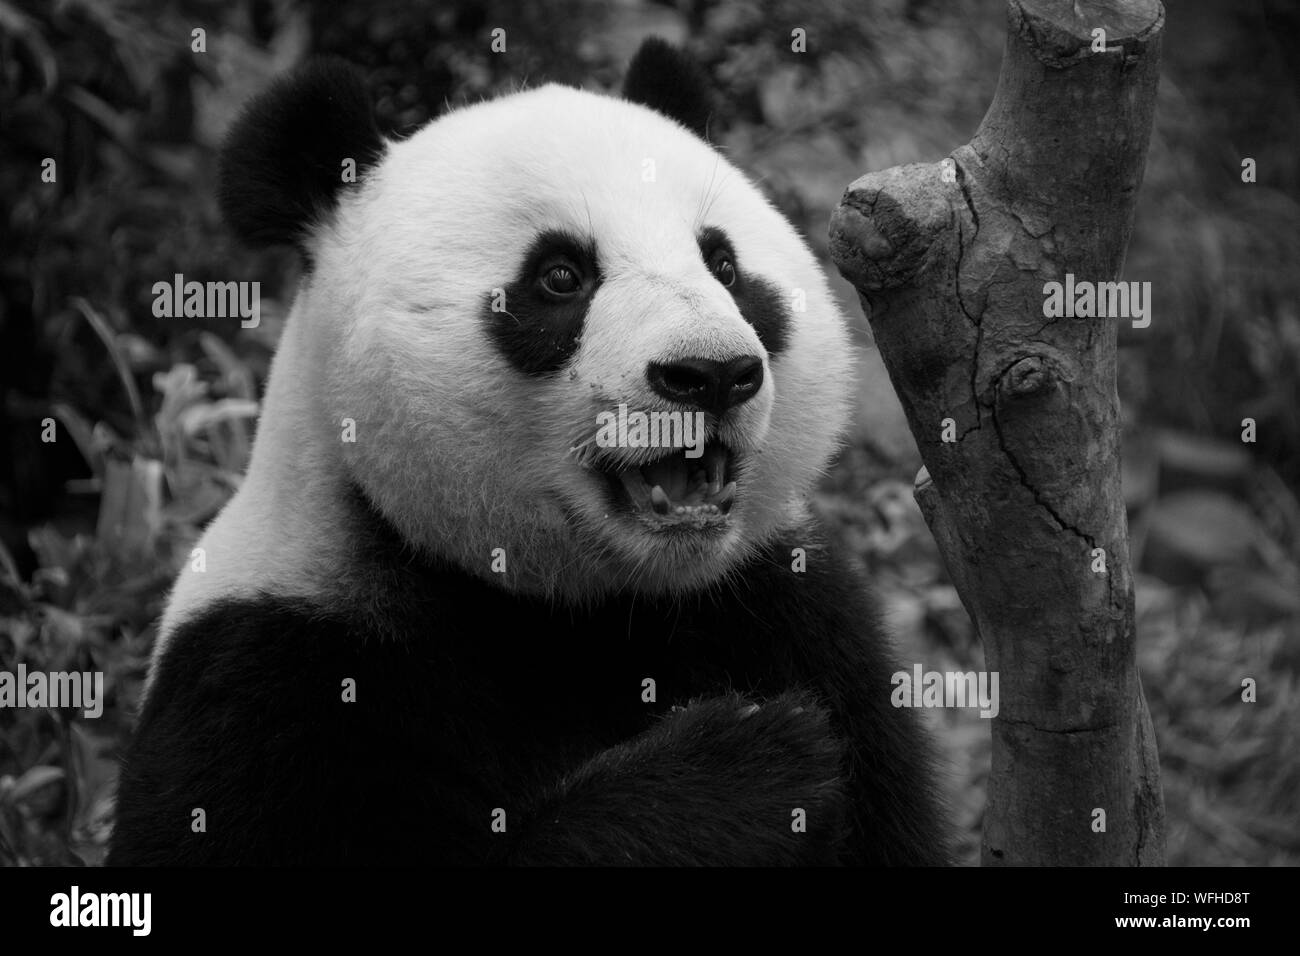 Giant panda Black and White Stock Photos & Images - Alamy